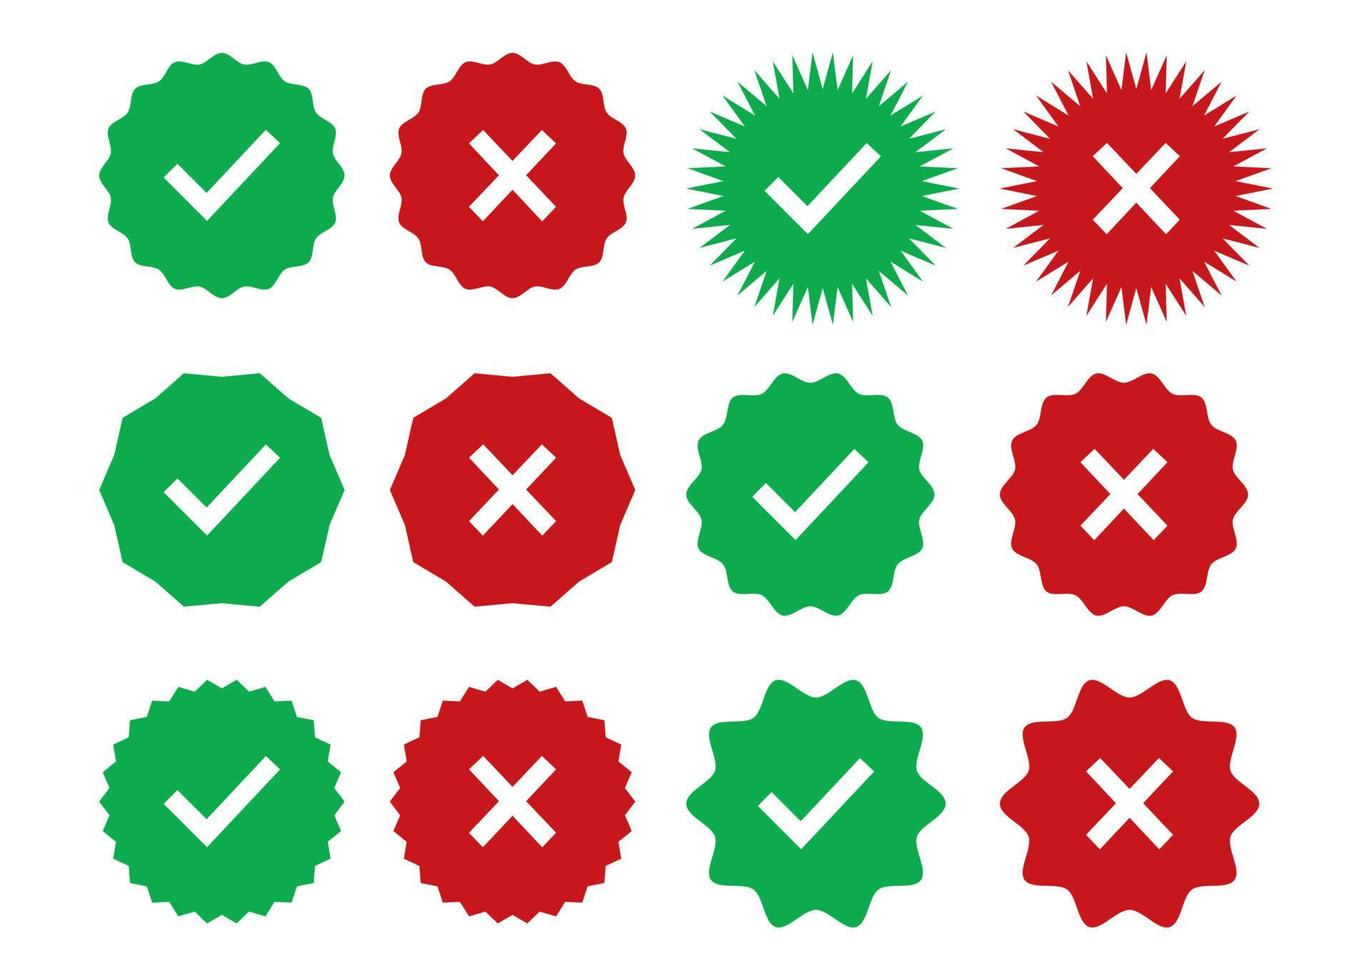 marcas de verificación de aceptado rechazado, aprobado desaprobado, sí no, correcto incorrecto, verde rojo, correcto falso vector